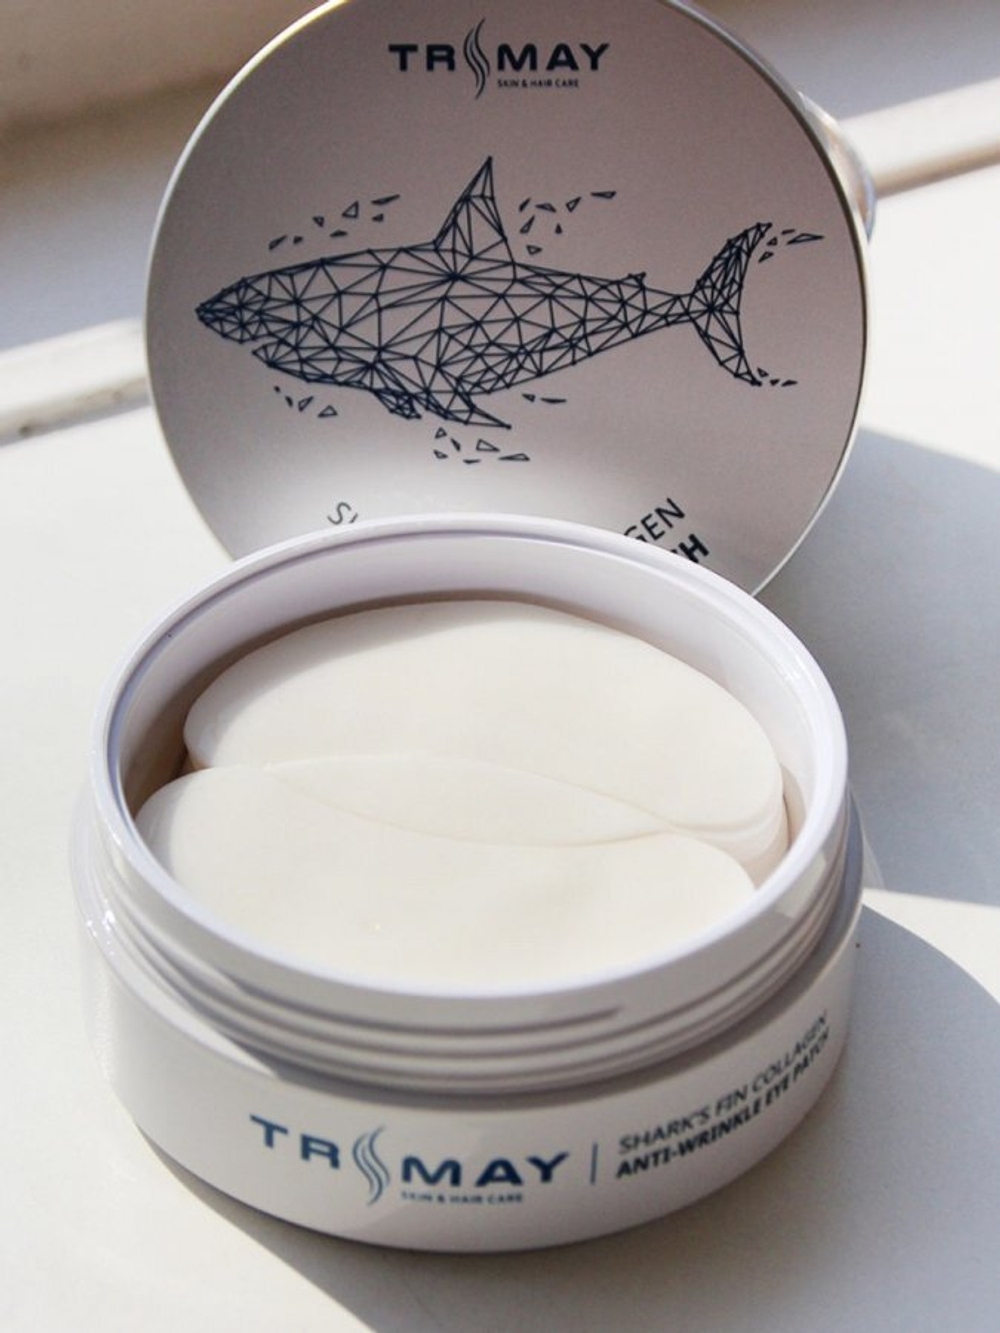 Антивозрастные патчи с коллагеном плавника акулы - TRIMAY Shark’s Fin Collagen Anti-wrinkle Eye Patch, 60 шт